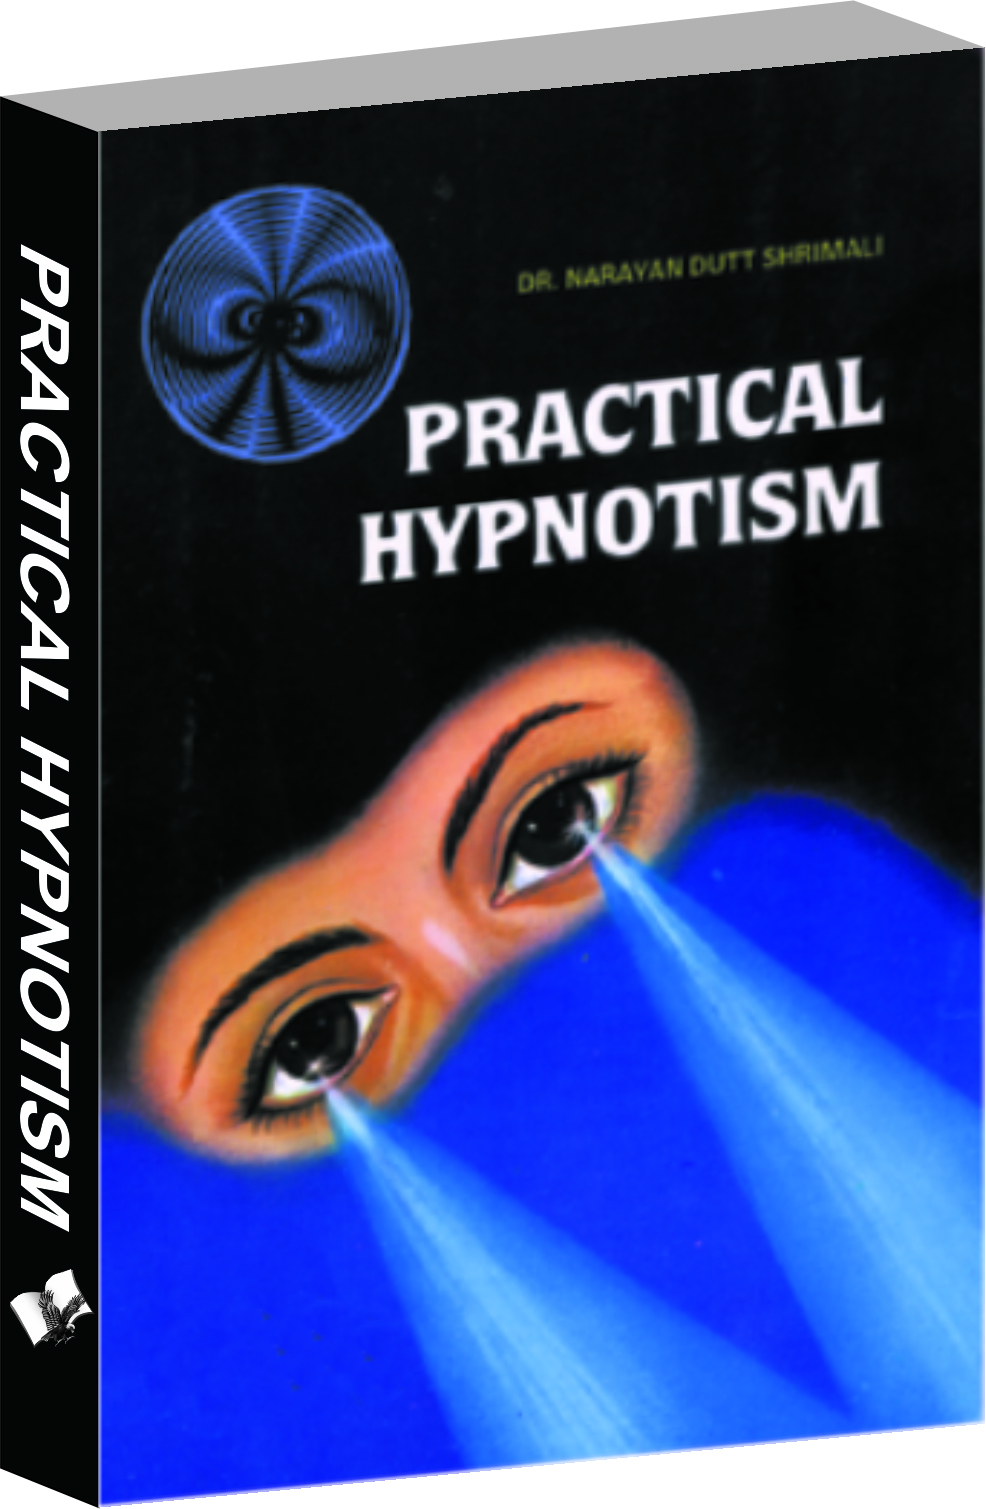 Practical Hypnotism-Practical ways to mesmerise